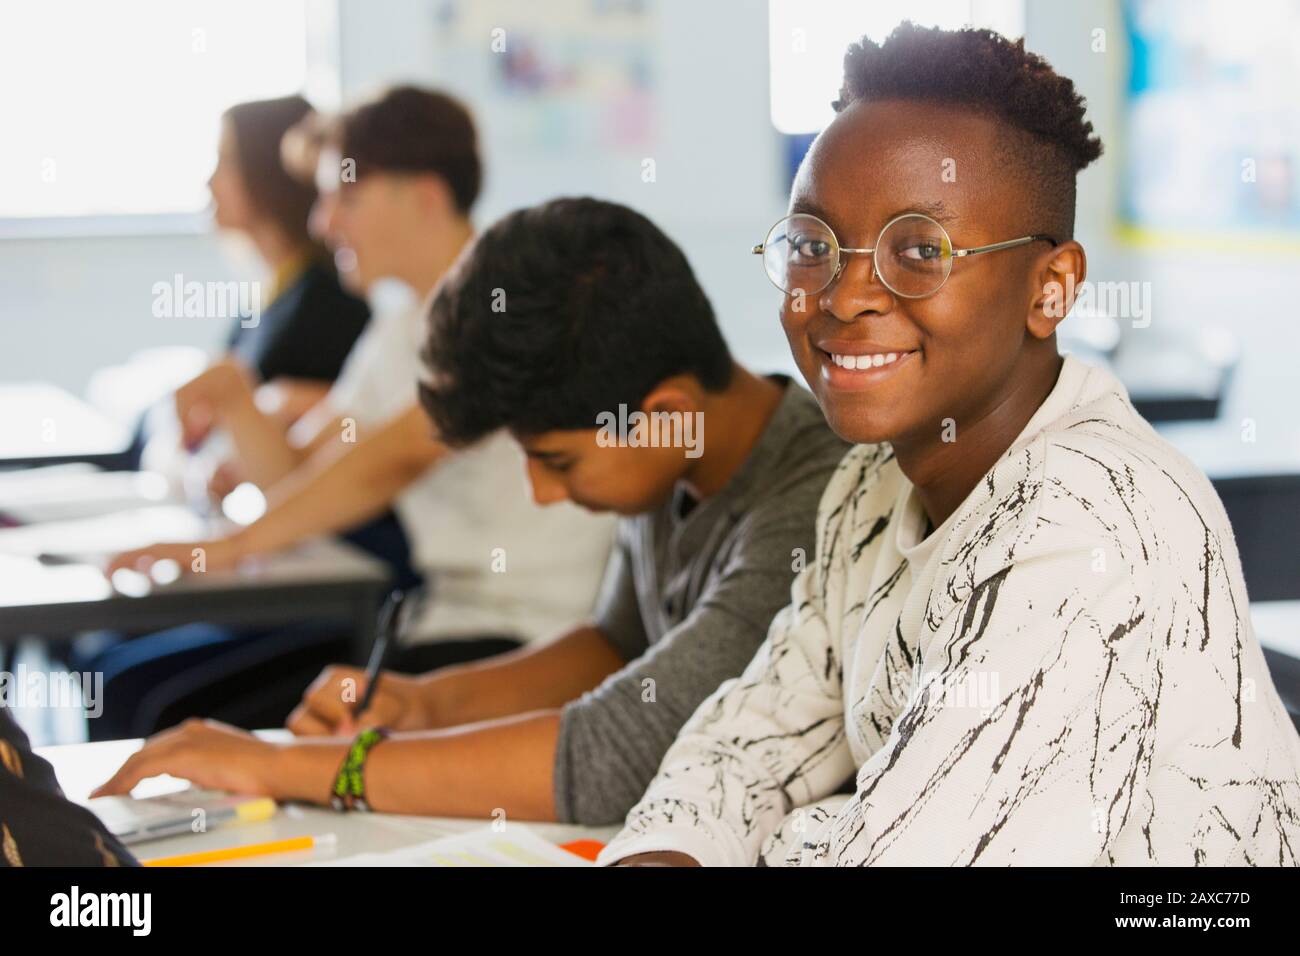 Portrait confident high school boy student in classroom Stock Photo